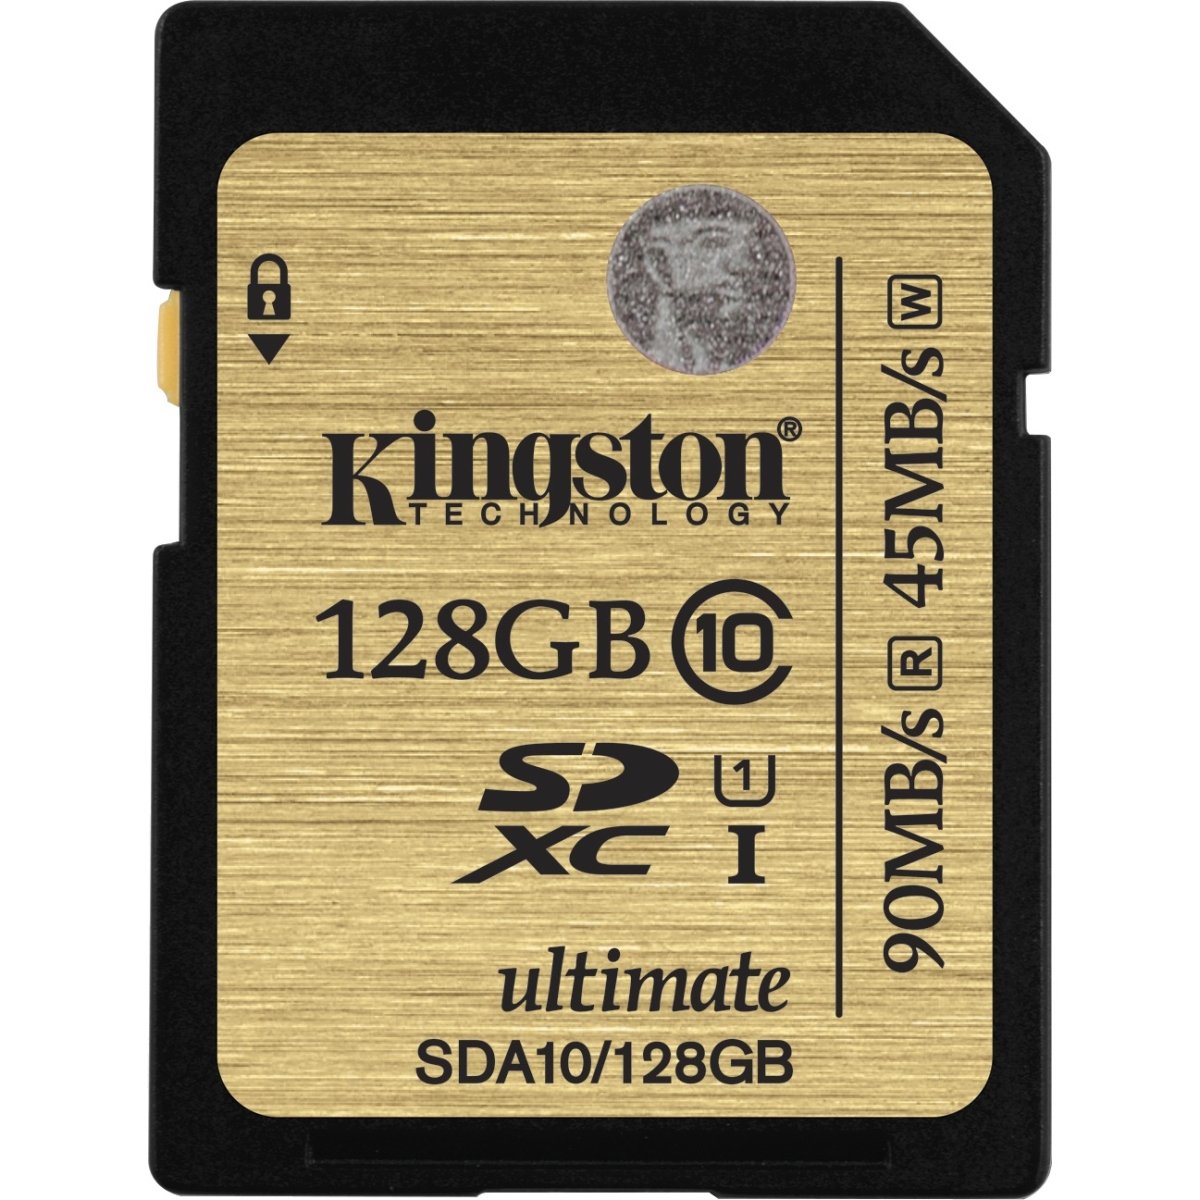 Kingston SDA10/128GB Ultimate - Flash memory card - 128 GB - UHS Class 1 / Class10 - 300x - SDXC